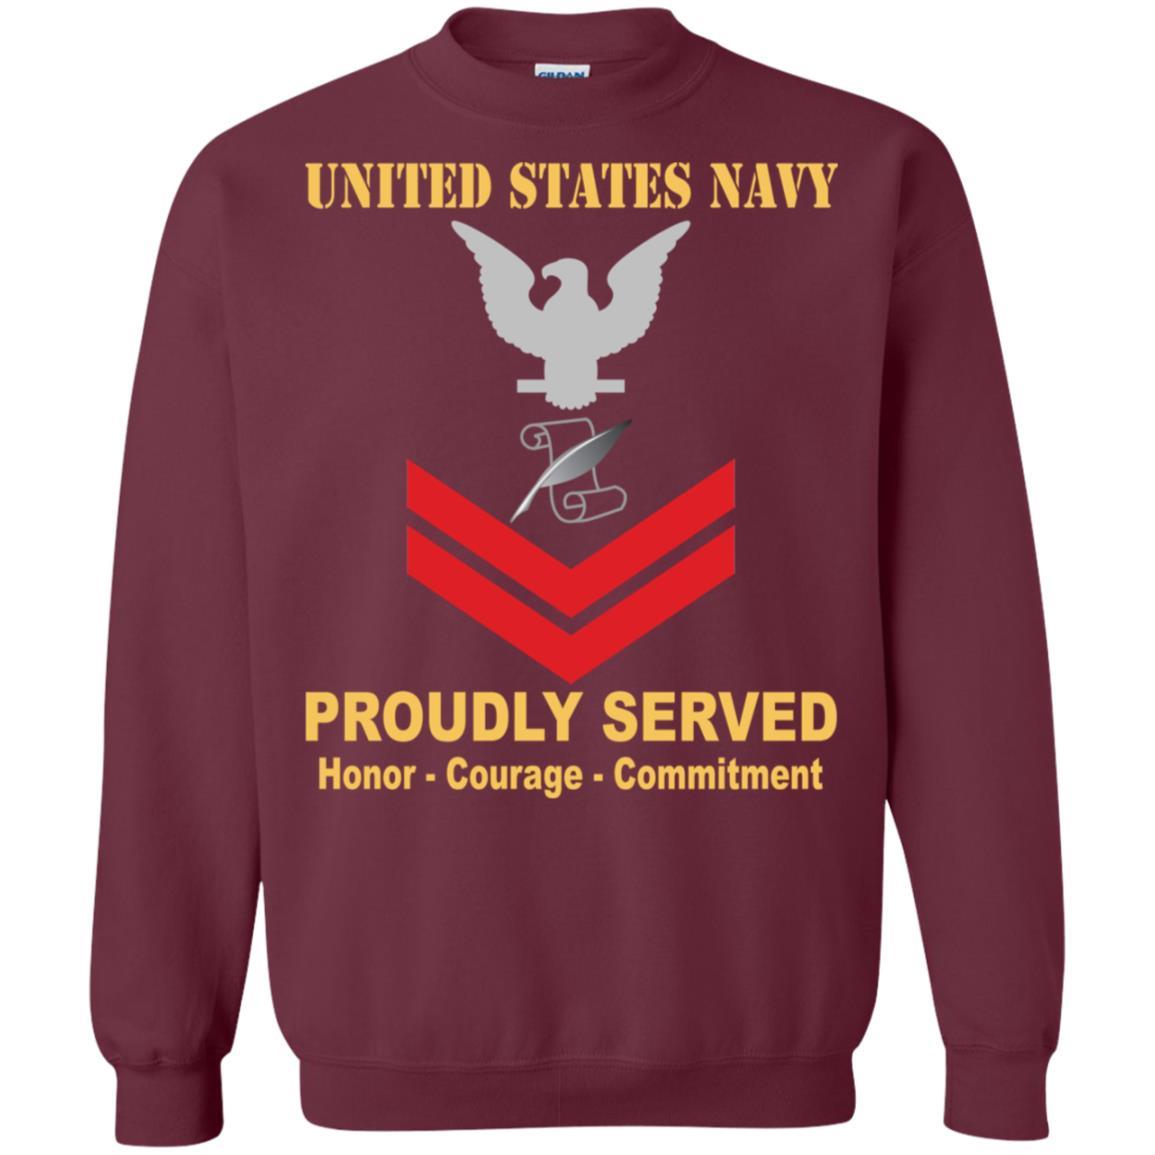 Navy Journalist Navy JO E-5 Rating Badges Proudly Served T-Shirt For Men On Front-TShirt-Navy-Veterans Nation